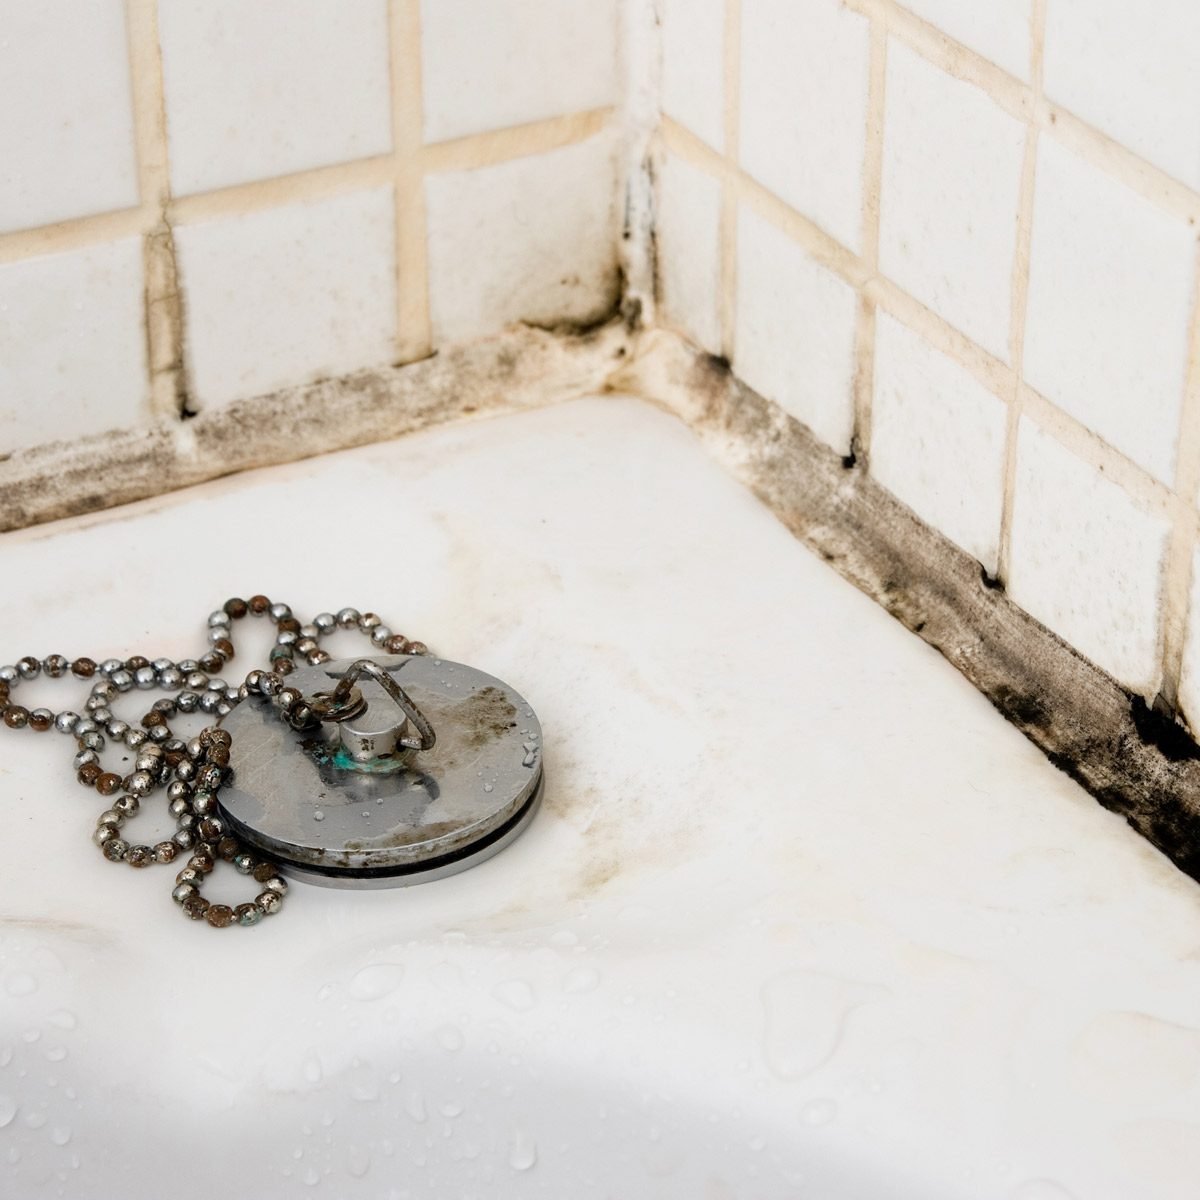 How To Prevent Bathroom Mold The Family Handyman